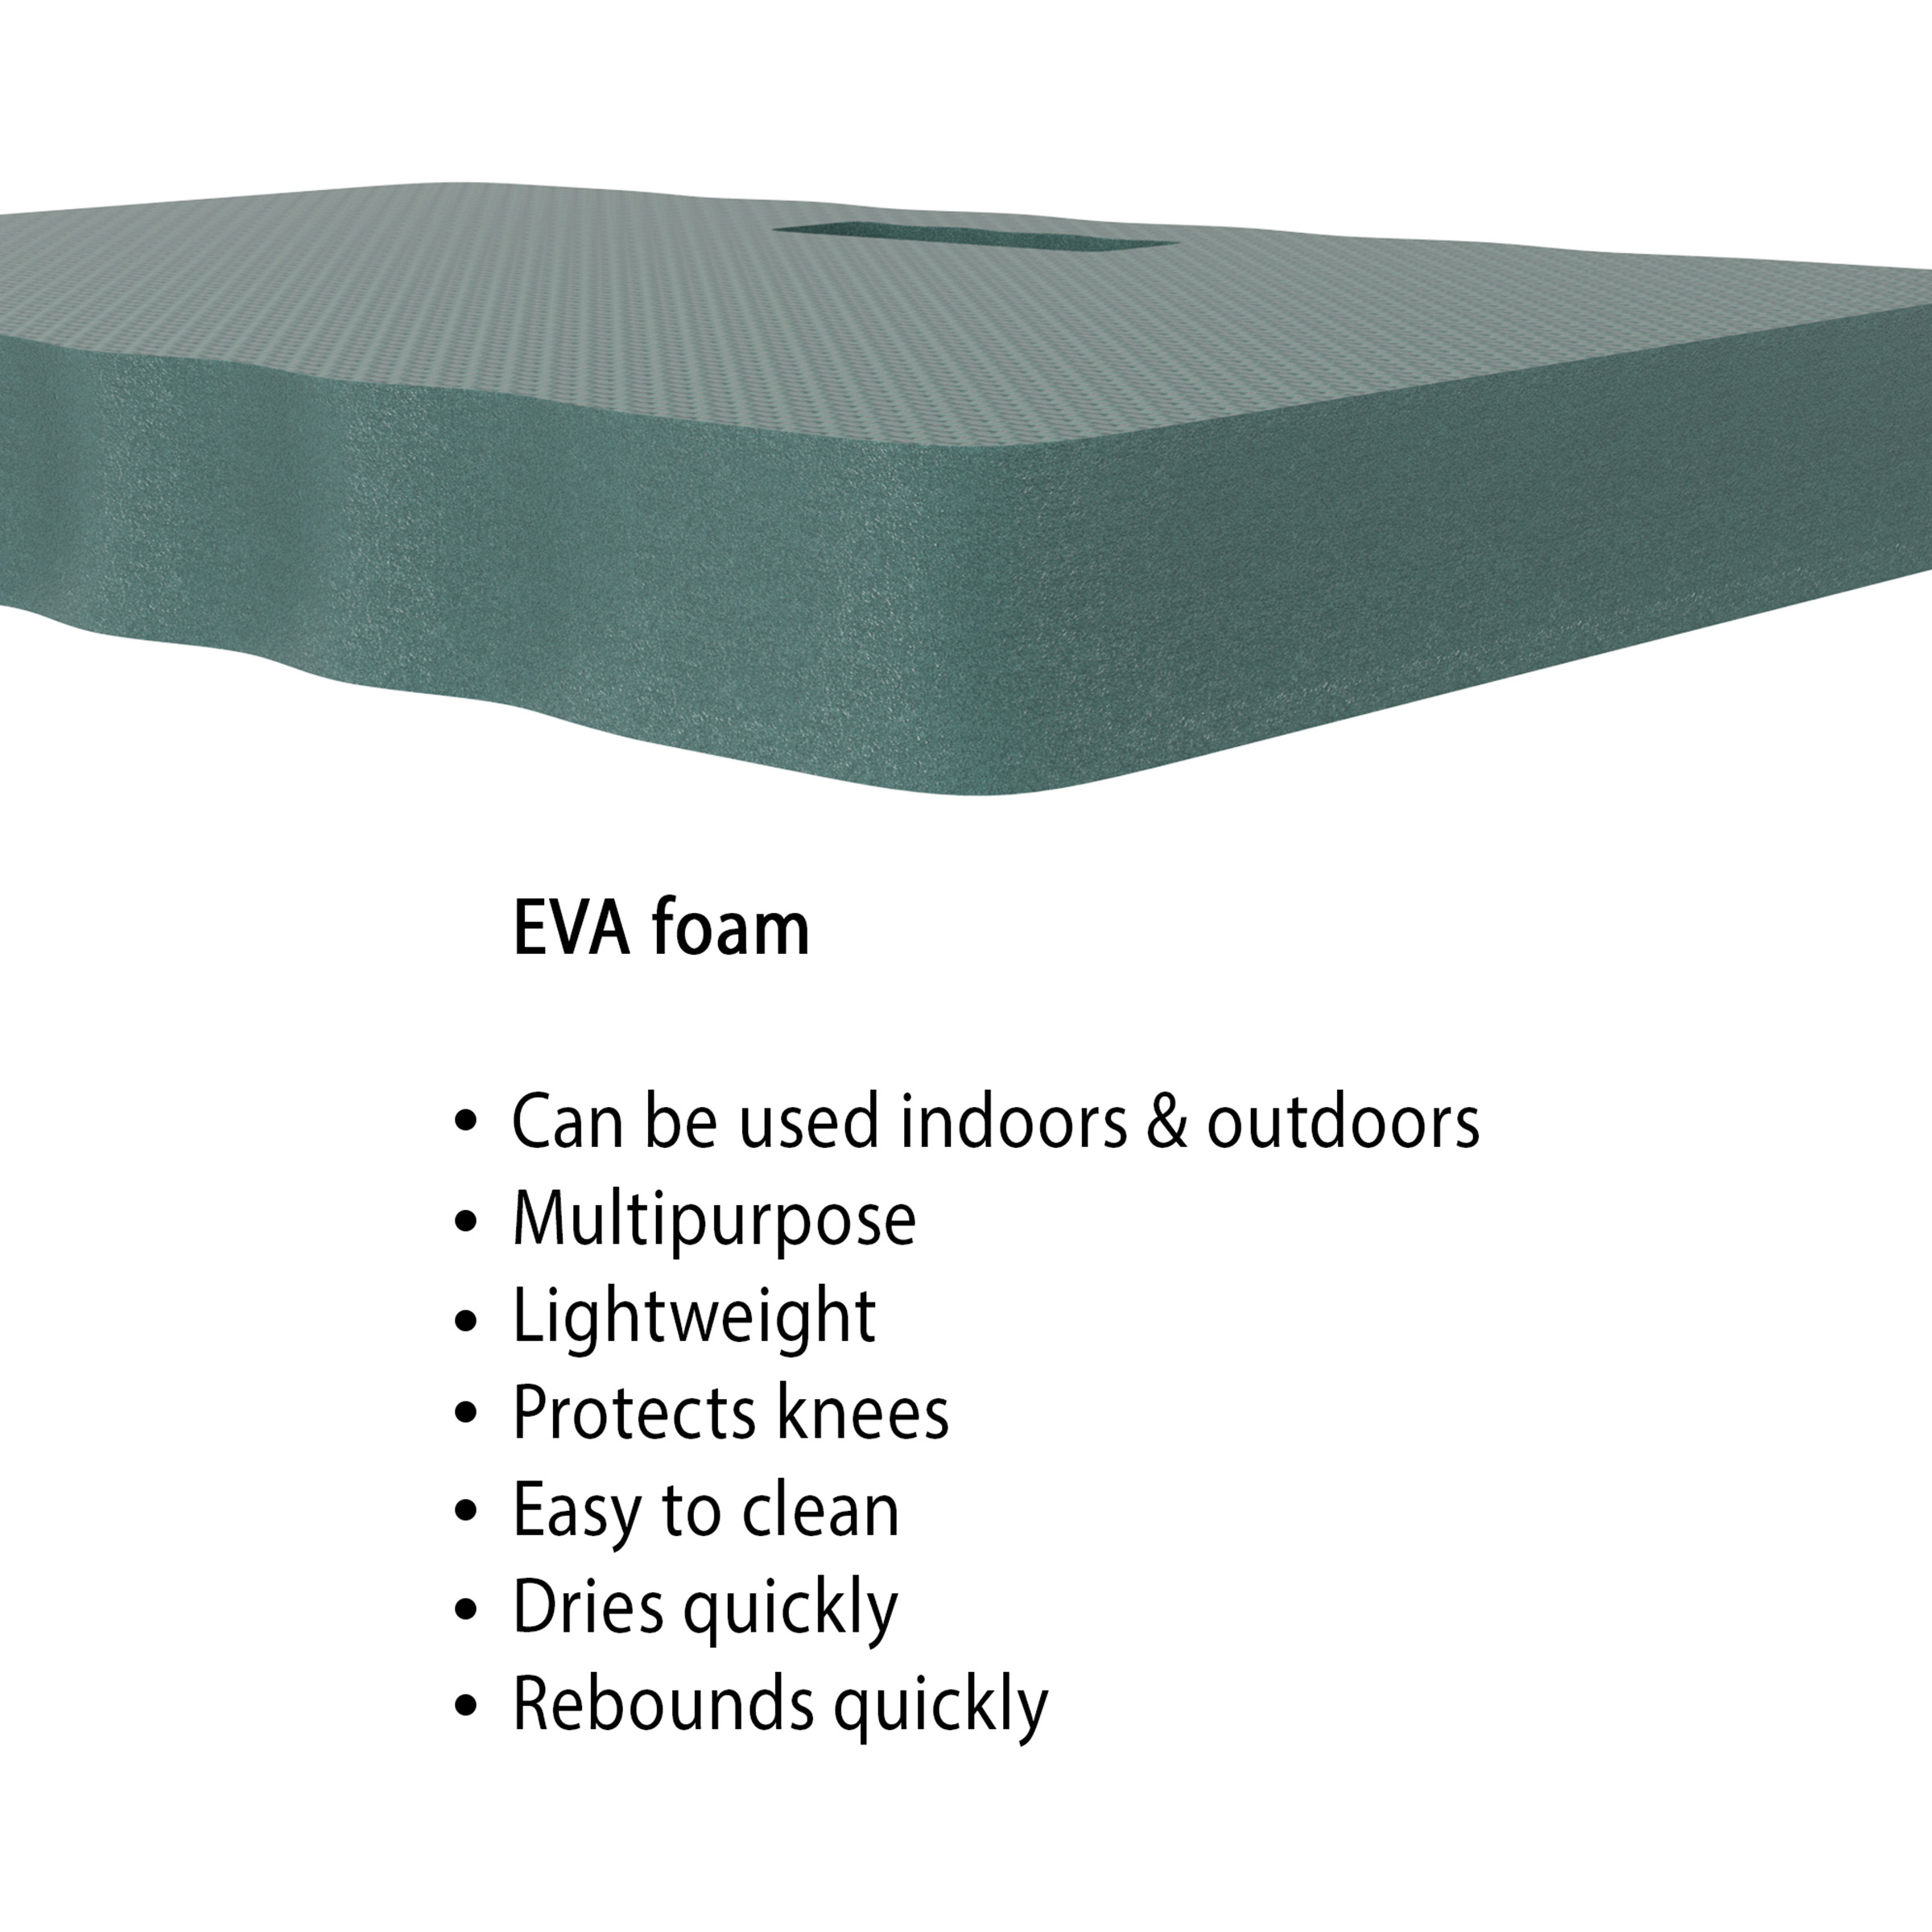 Pure Garden Multipurpose 1.5-Inch EVA Foam Kneeling Pad with Handle (Green) - image 3 of 6